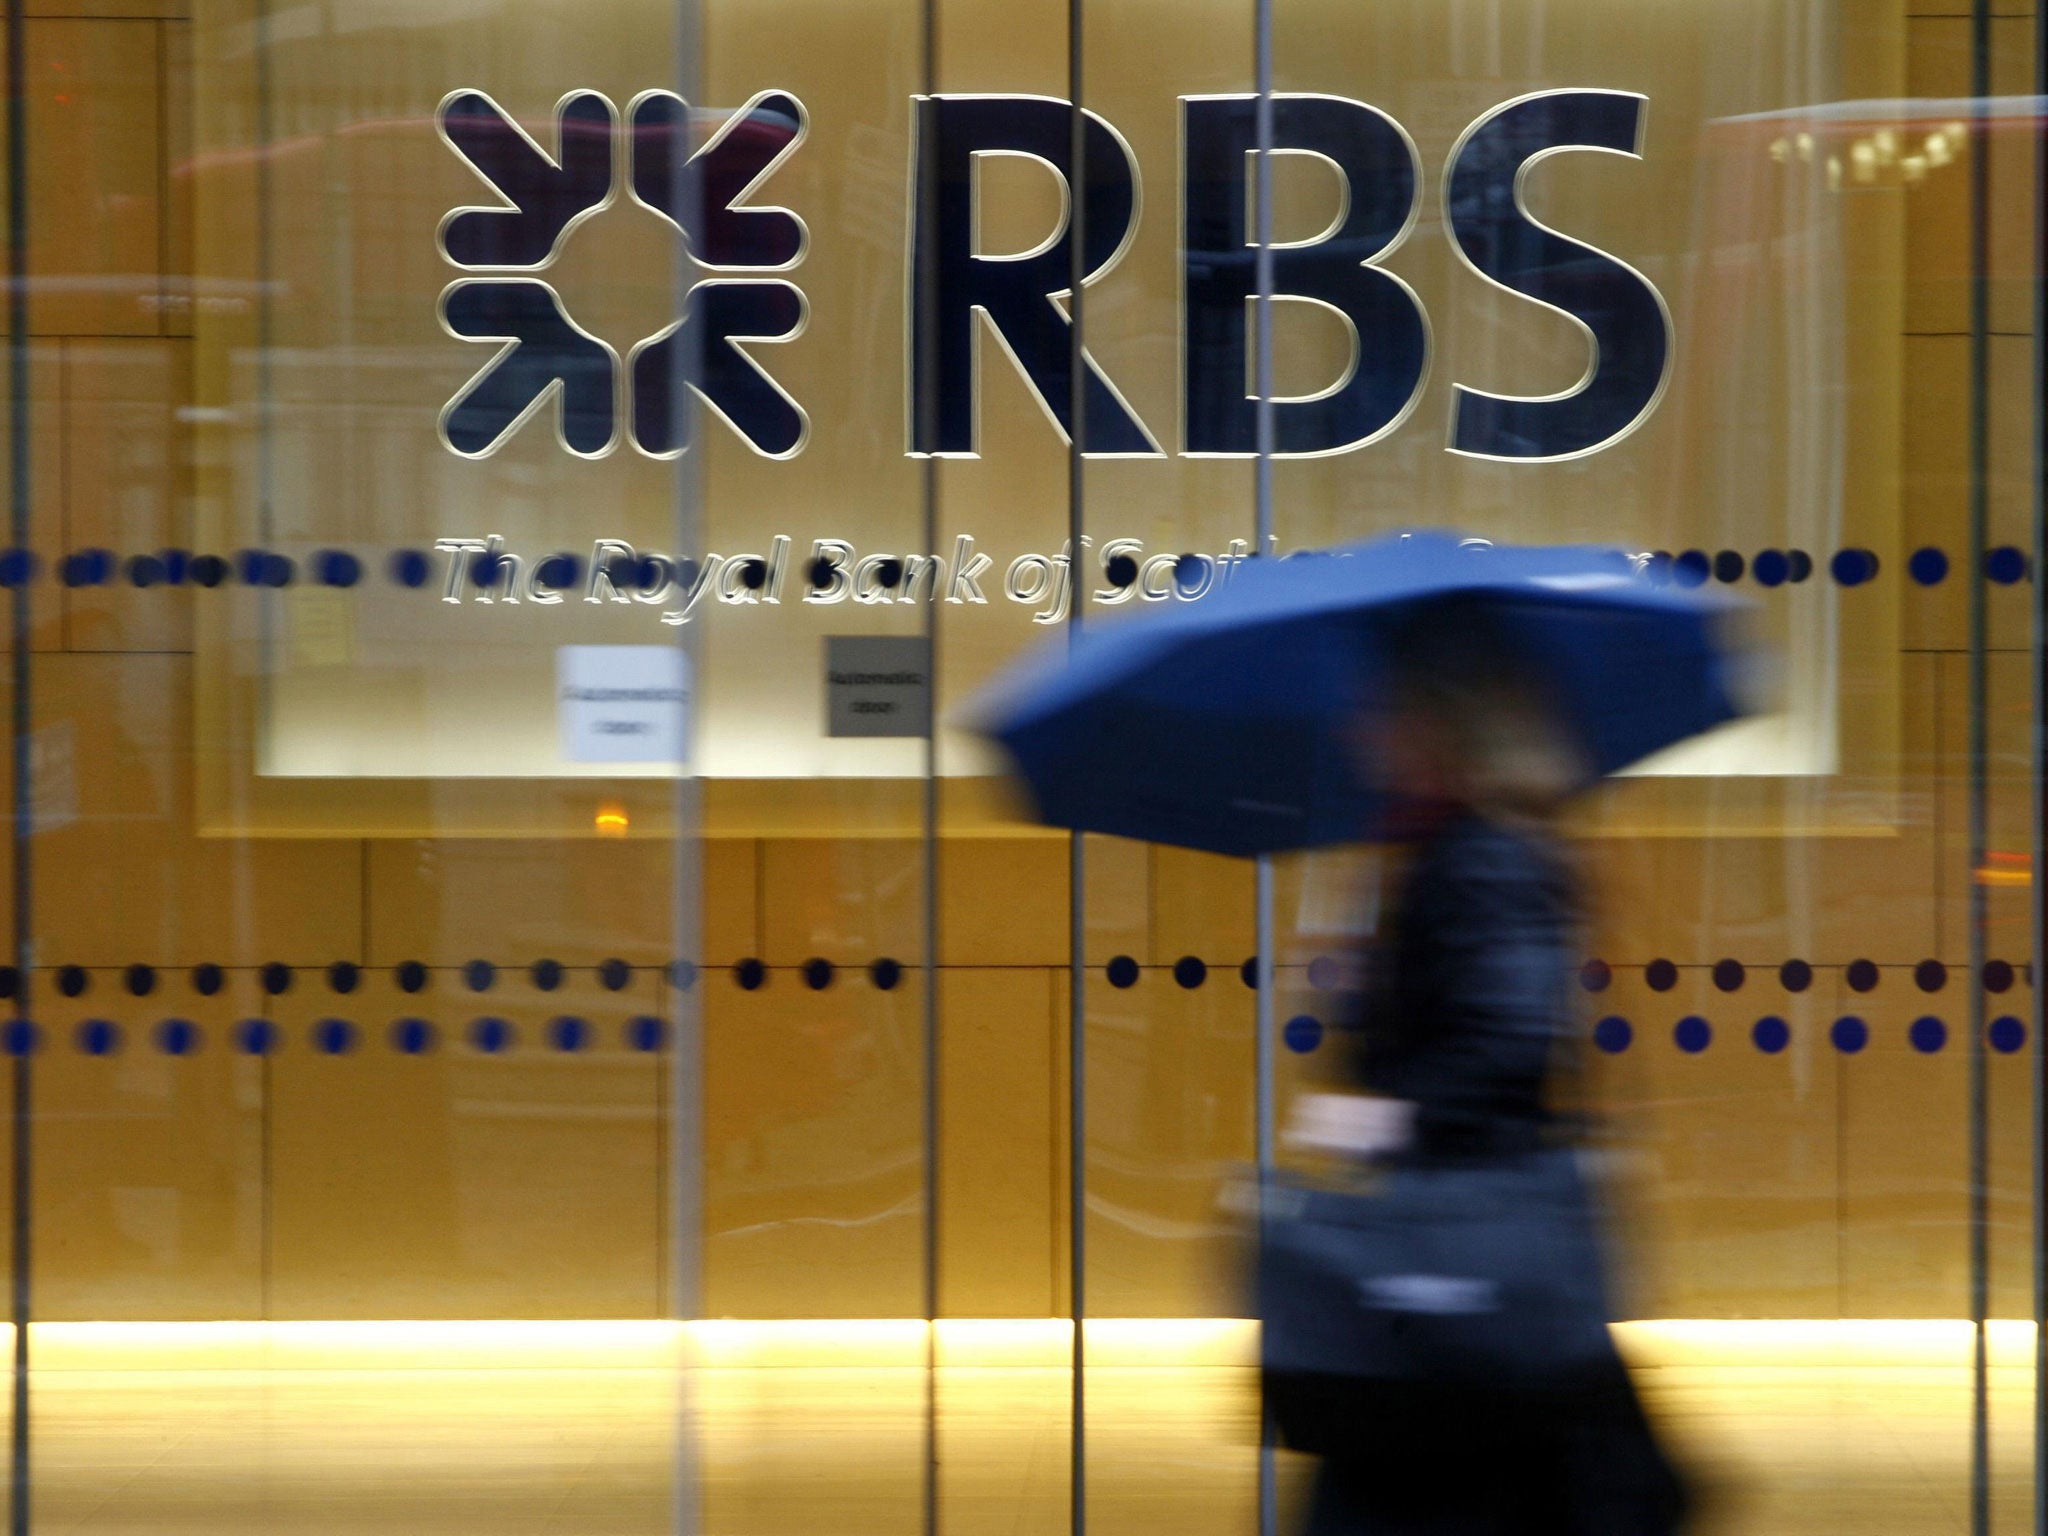 Royal Bank of Scotland is facing an inquiry by banking regulators